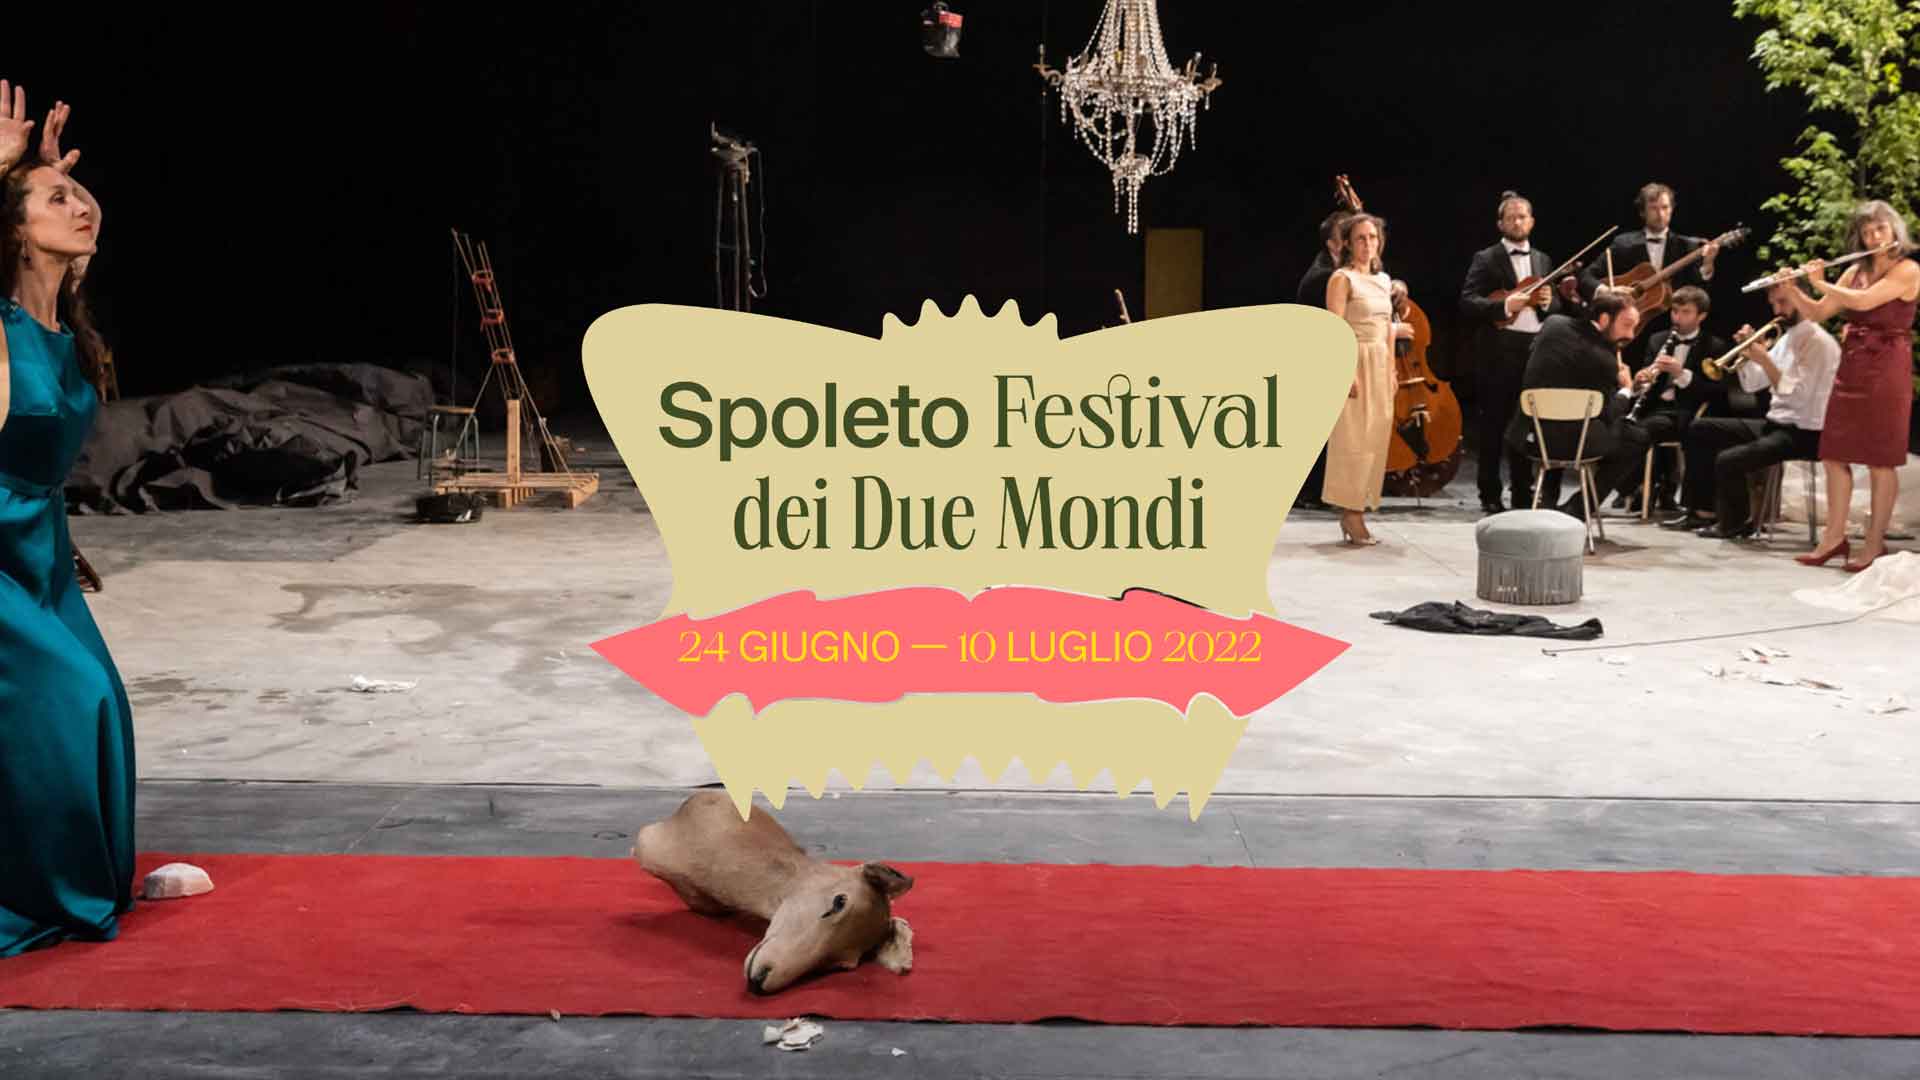 Festival dei Due Mondi - Spoleto